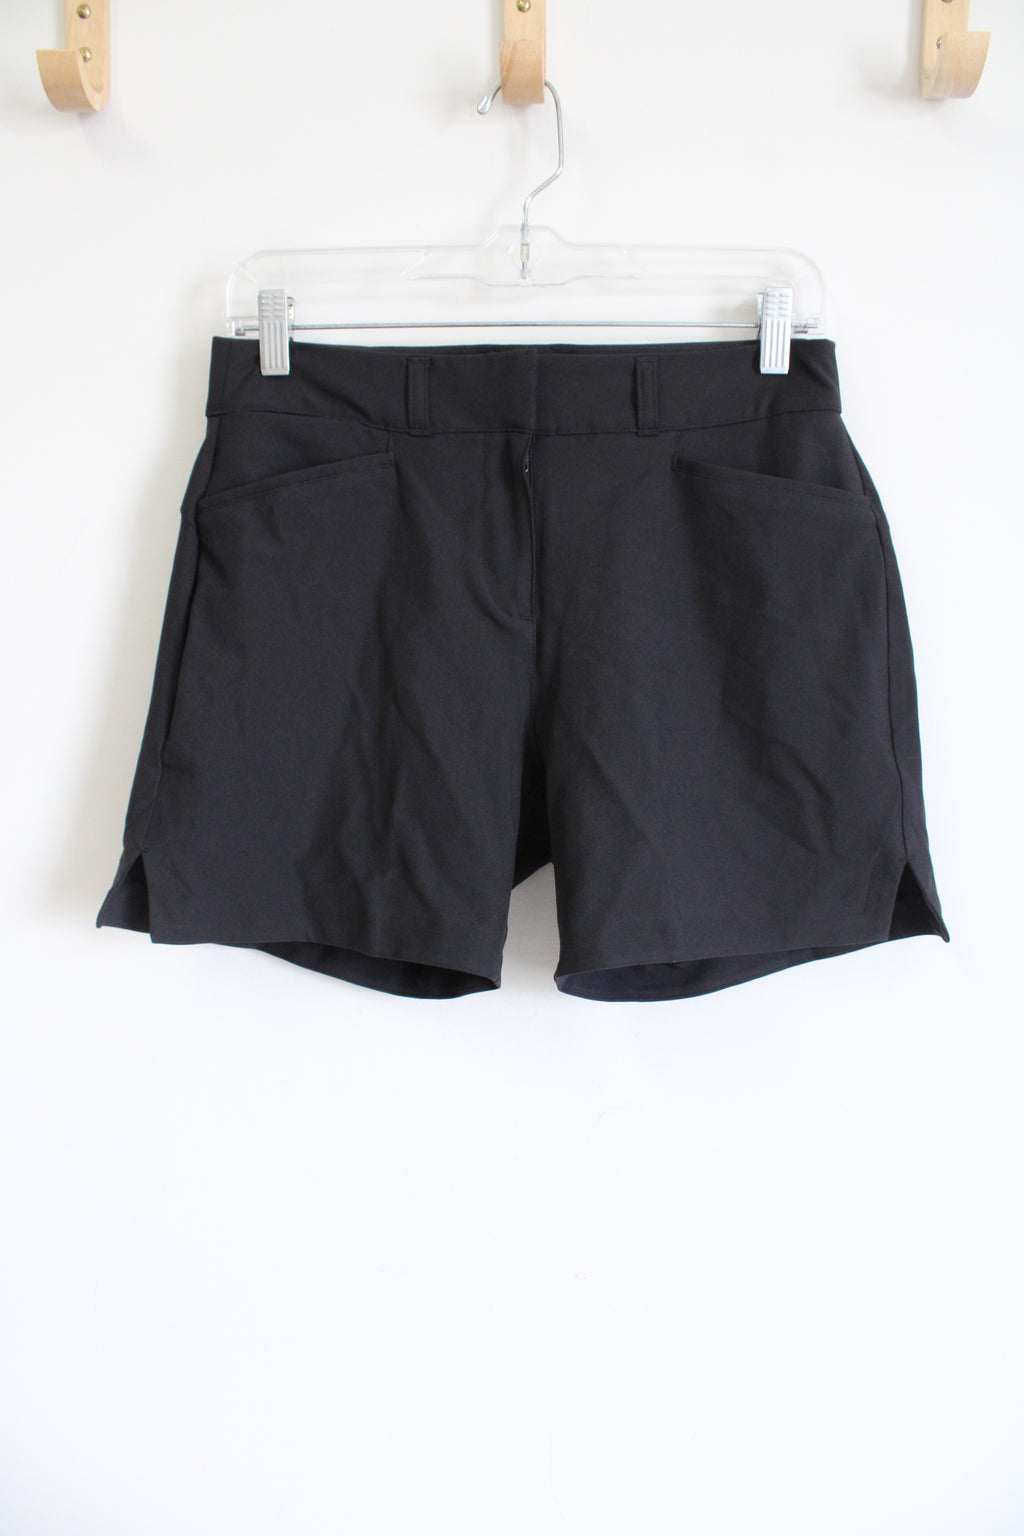 NEW Adidas Black Golf Shorts | 6